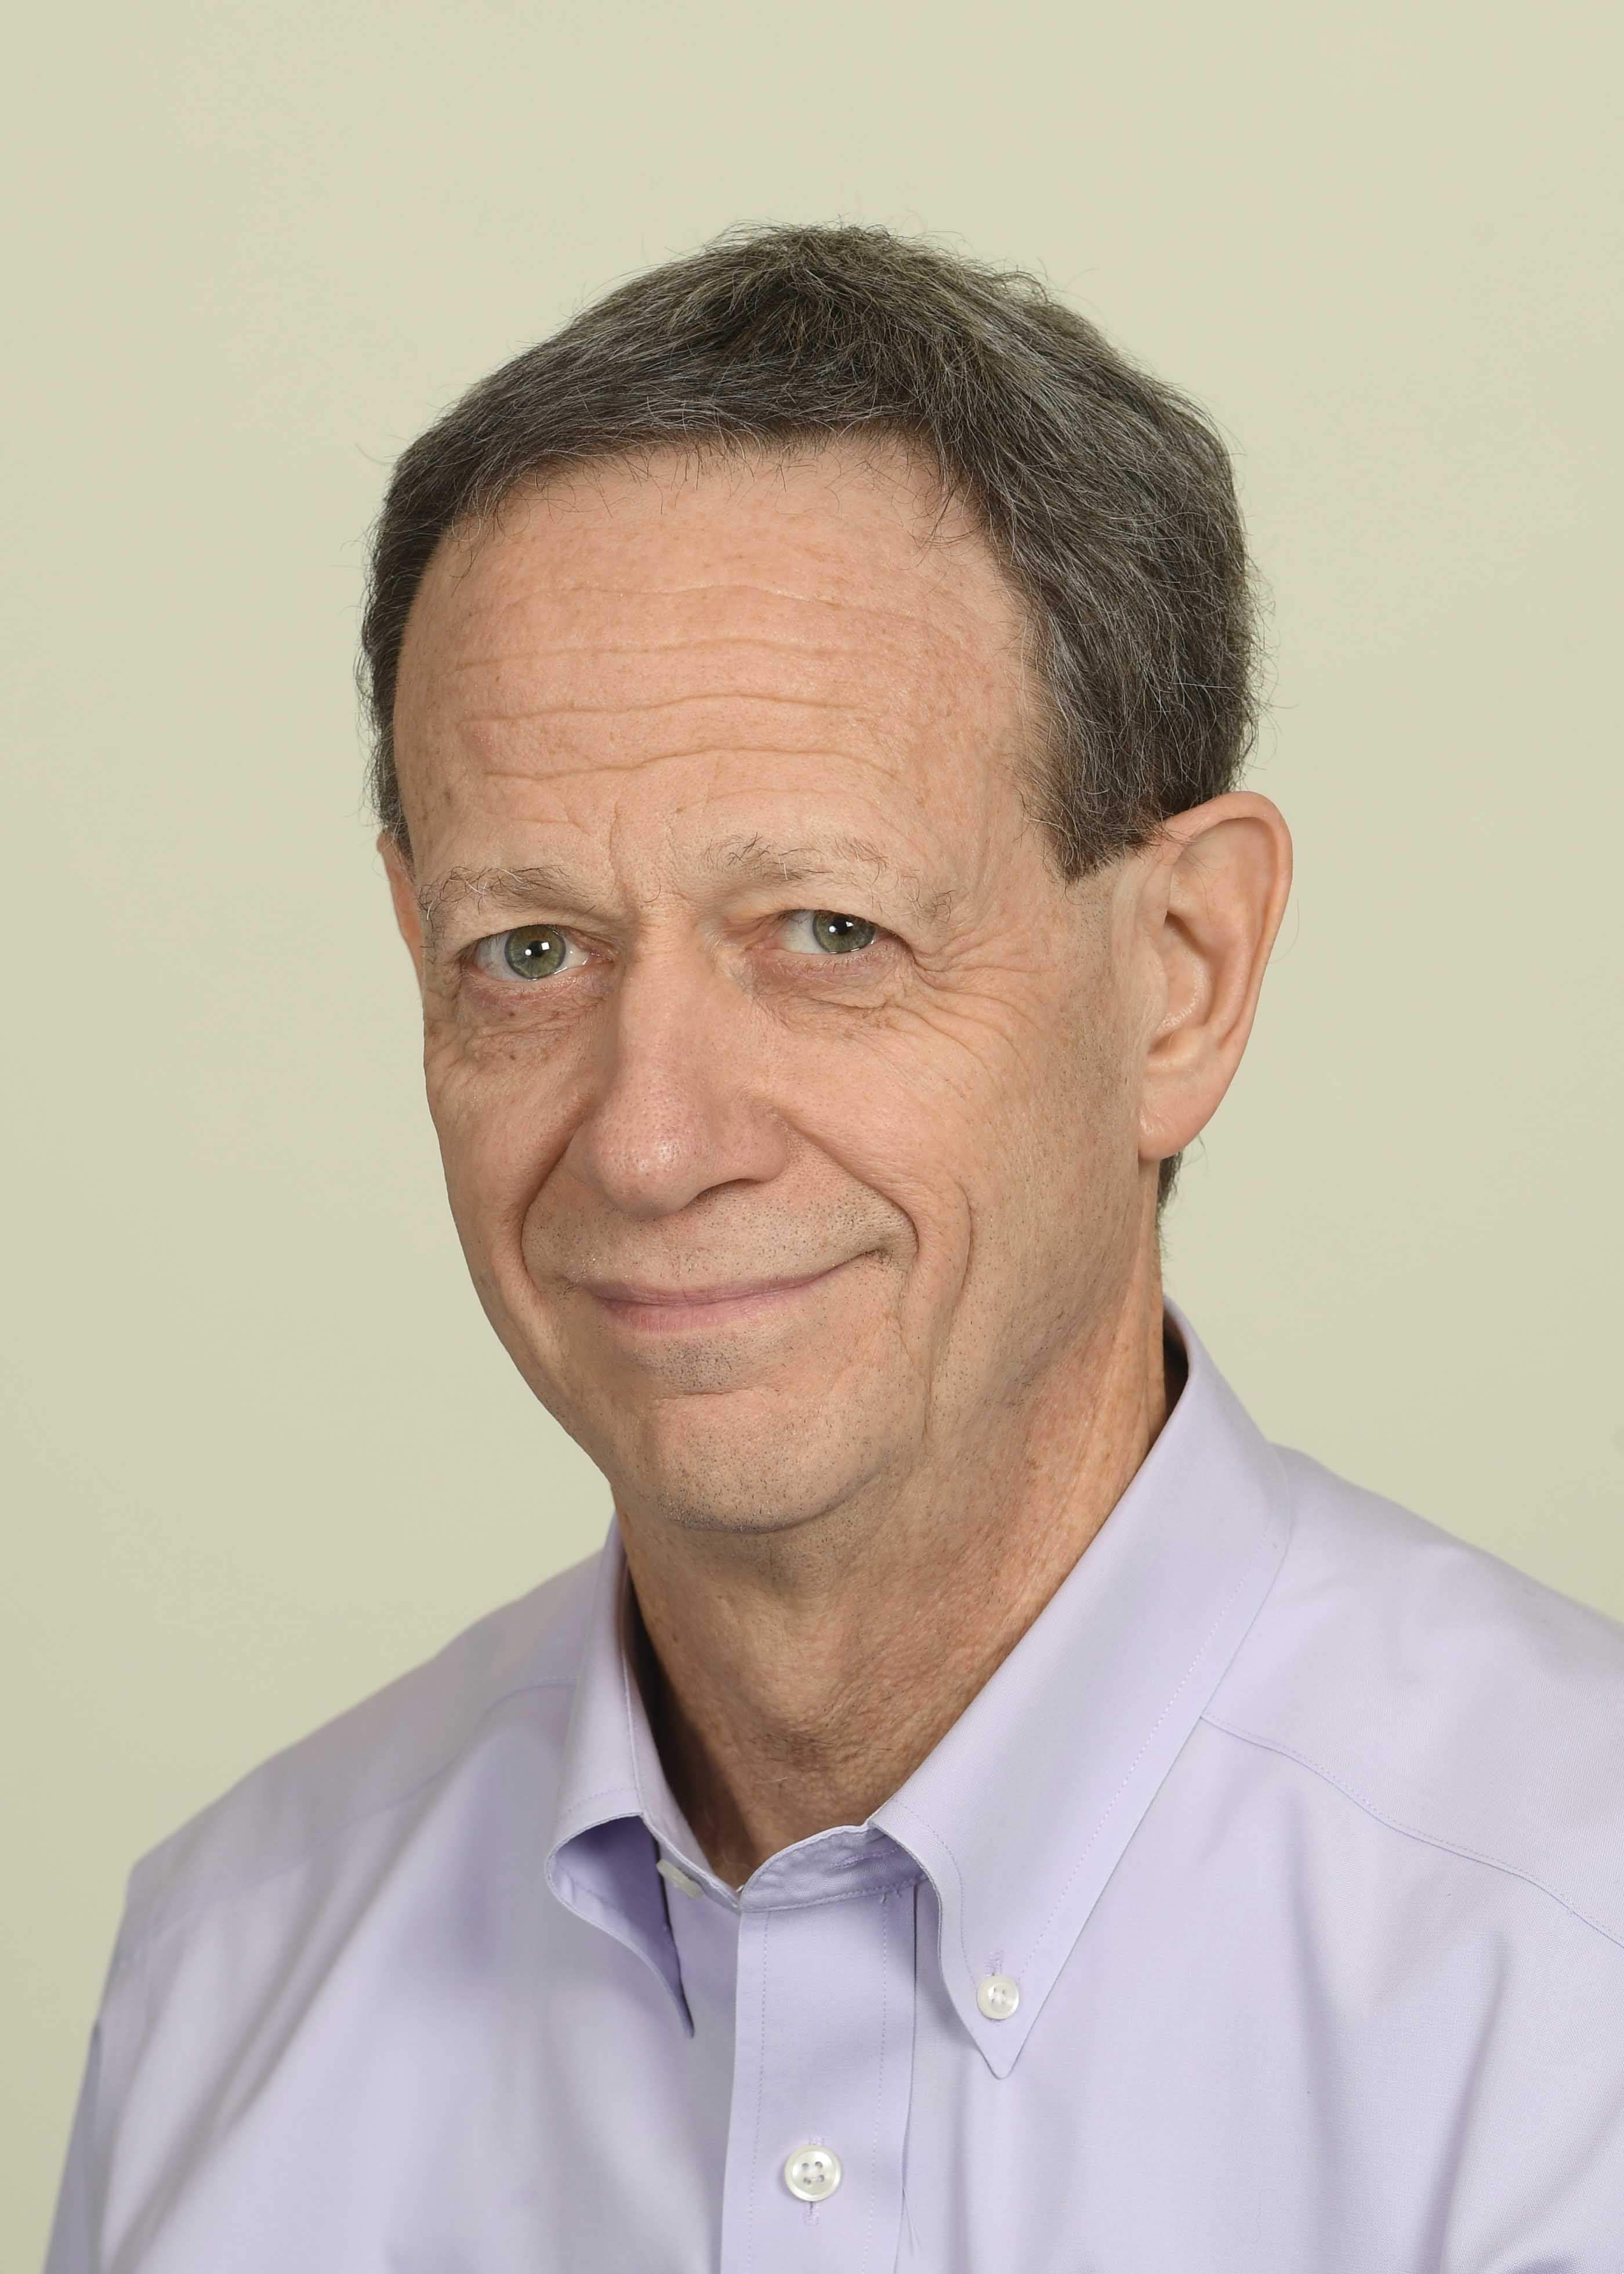 Dr. Scott Halperin